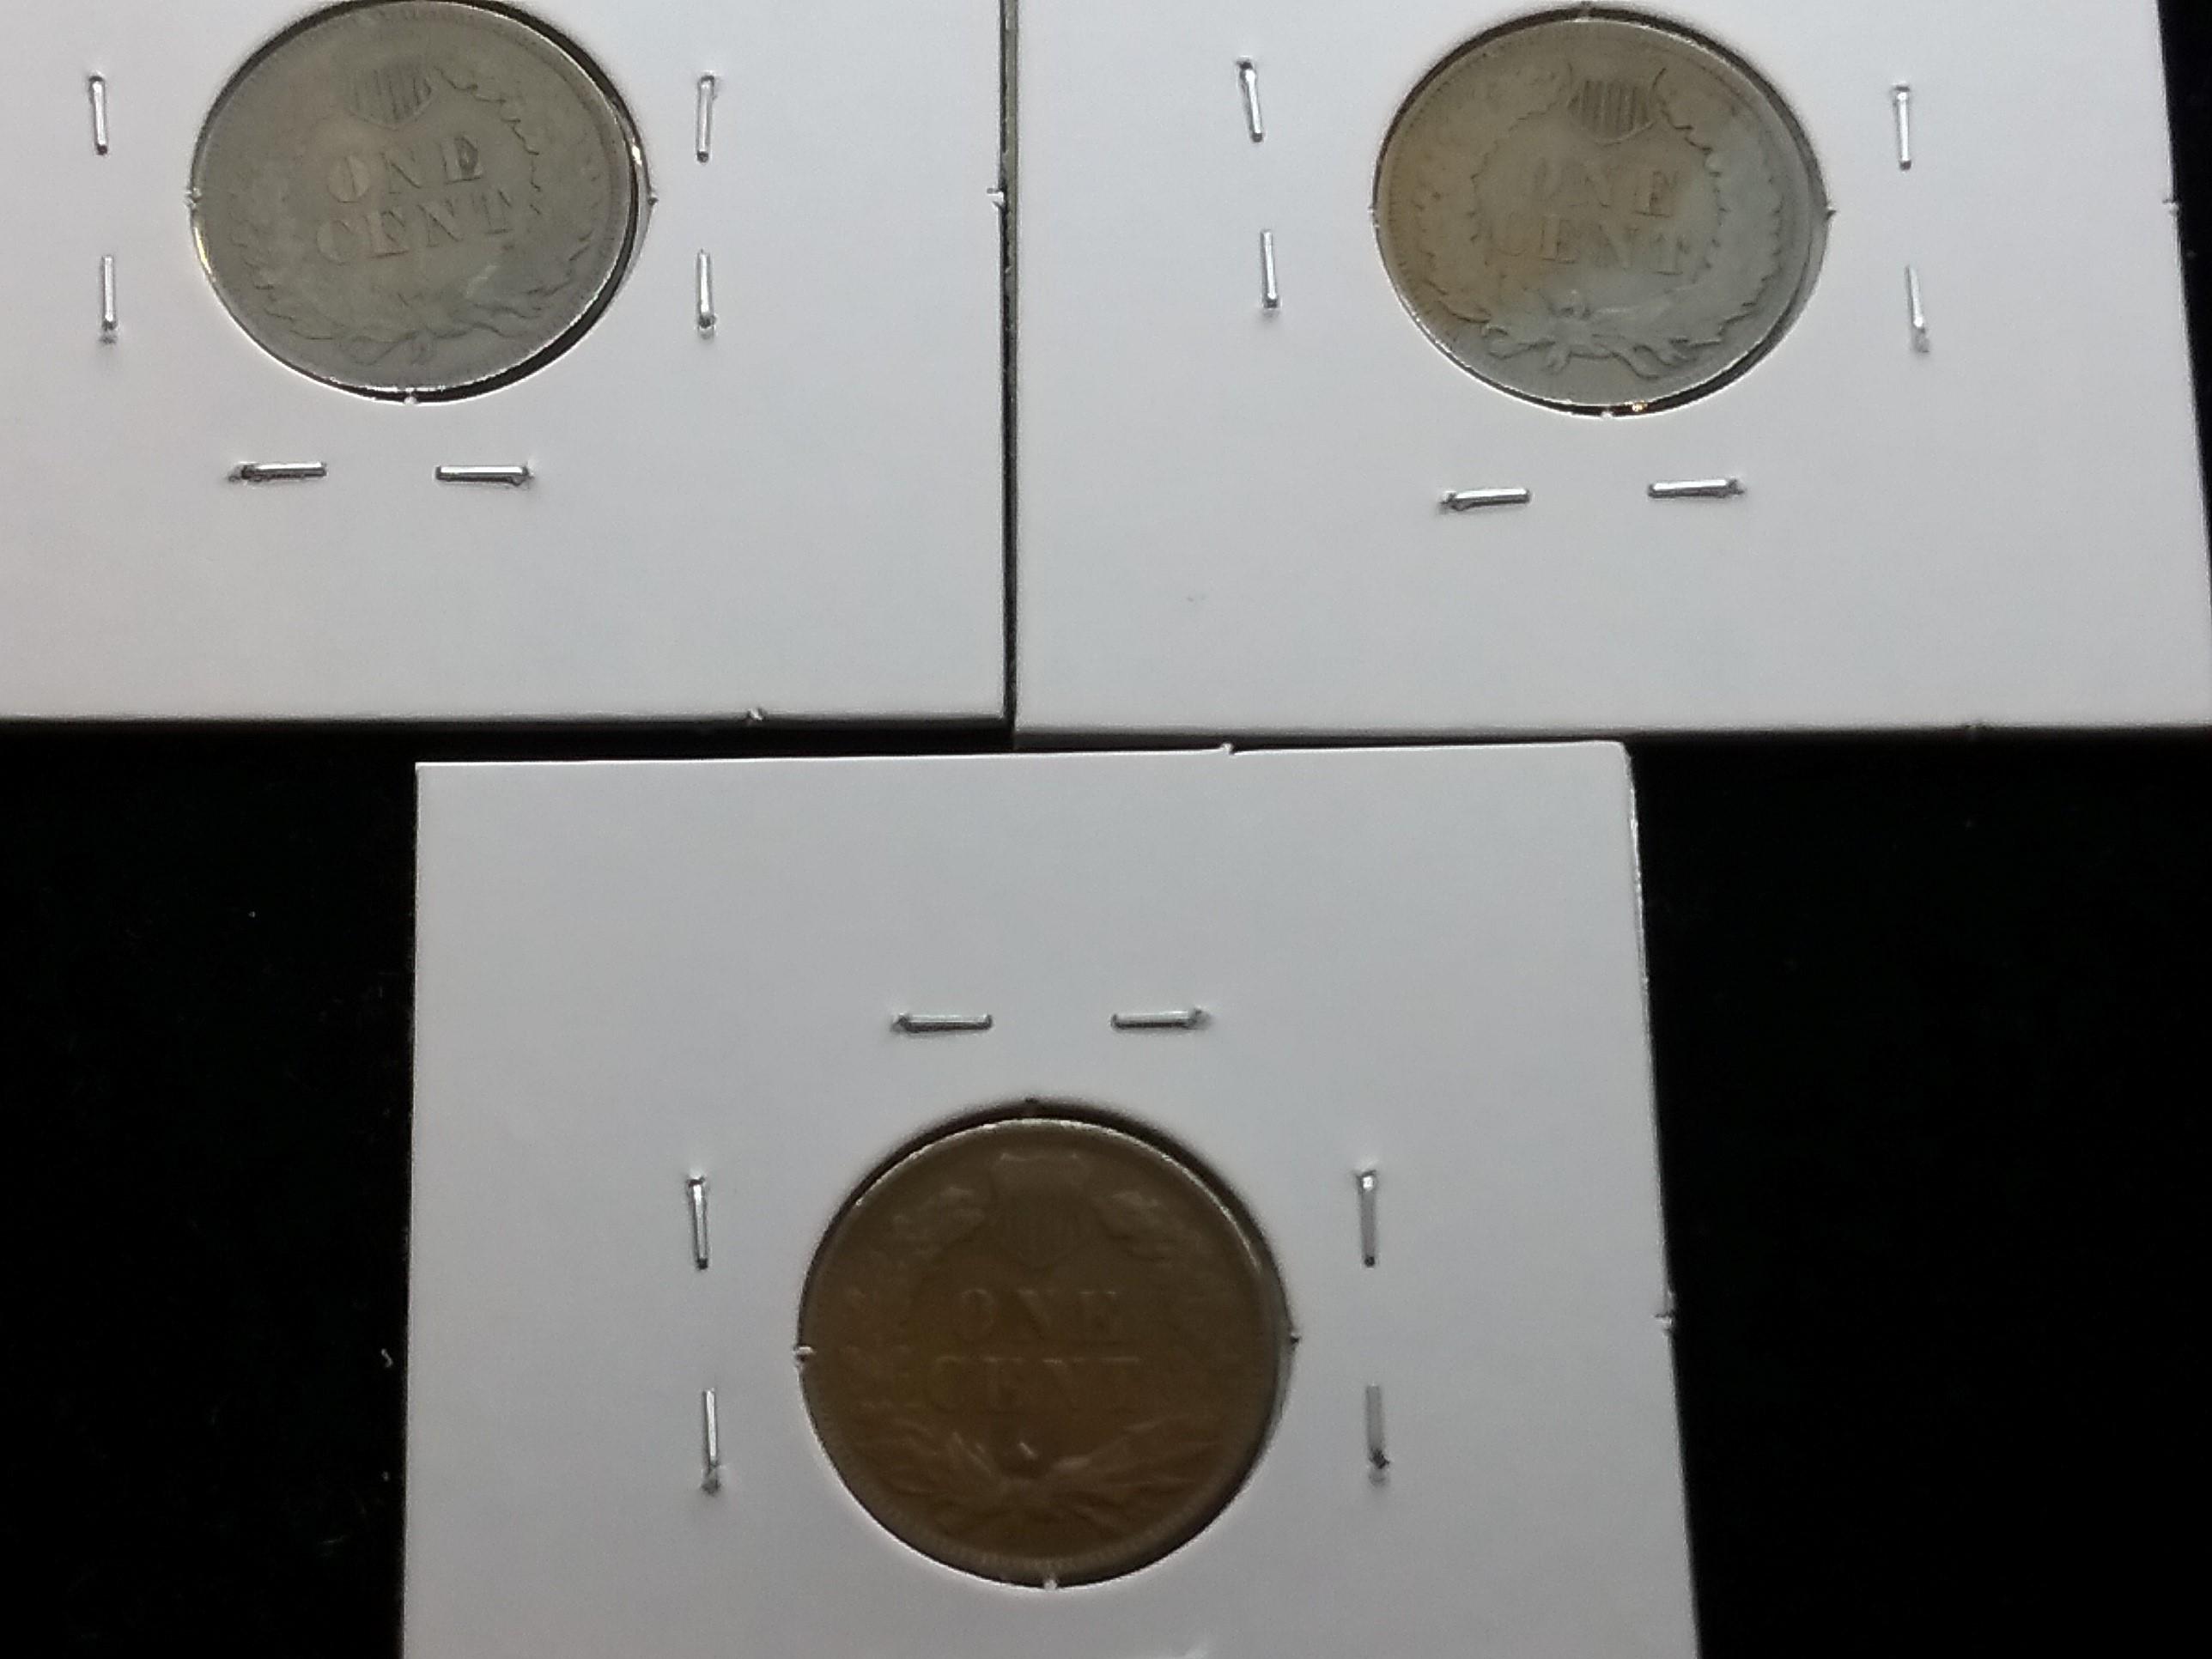 Three decenter Indian cents